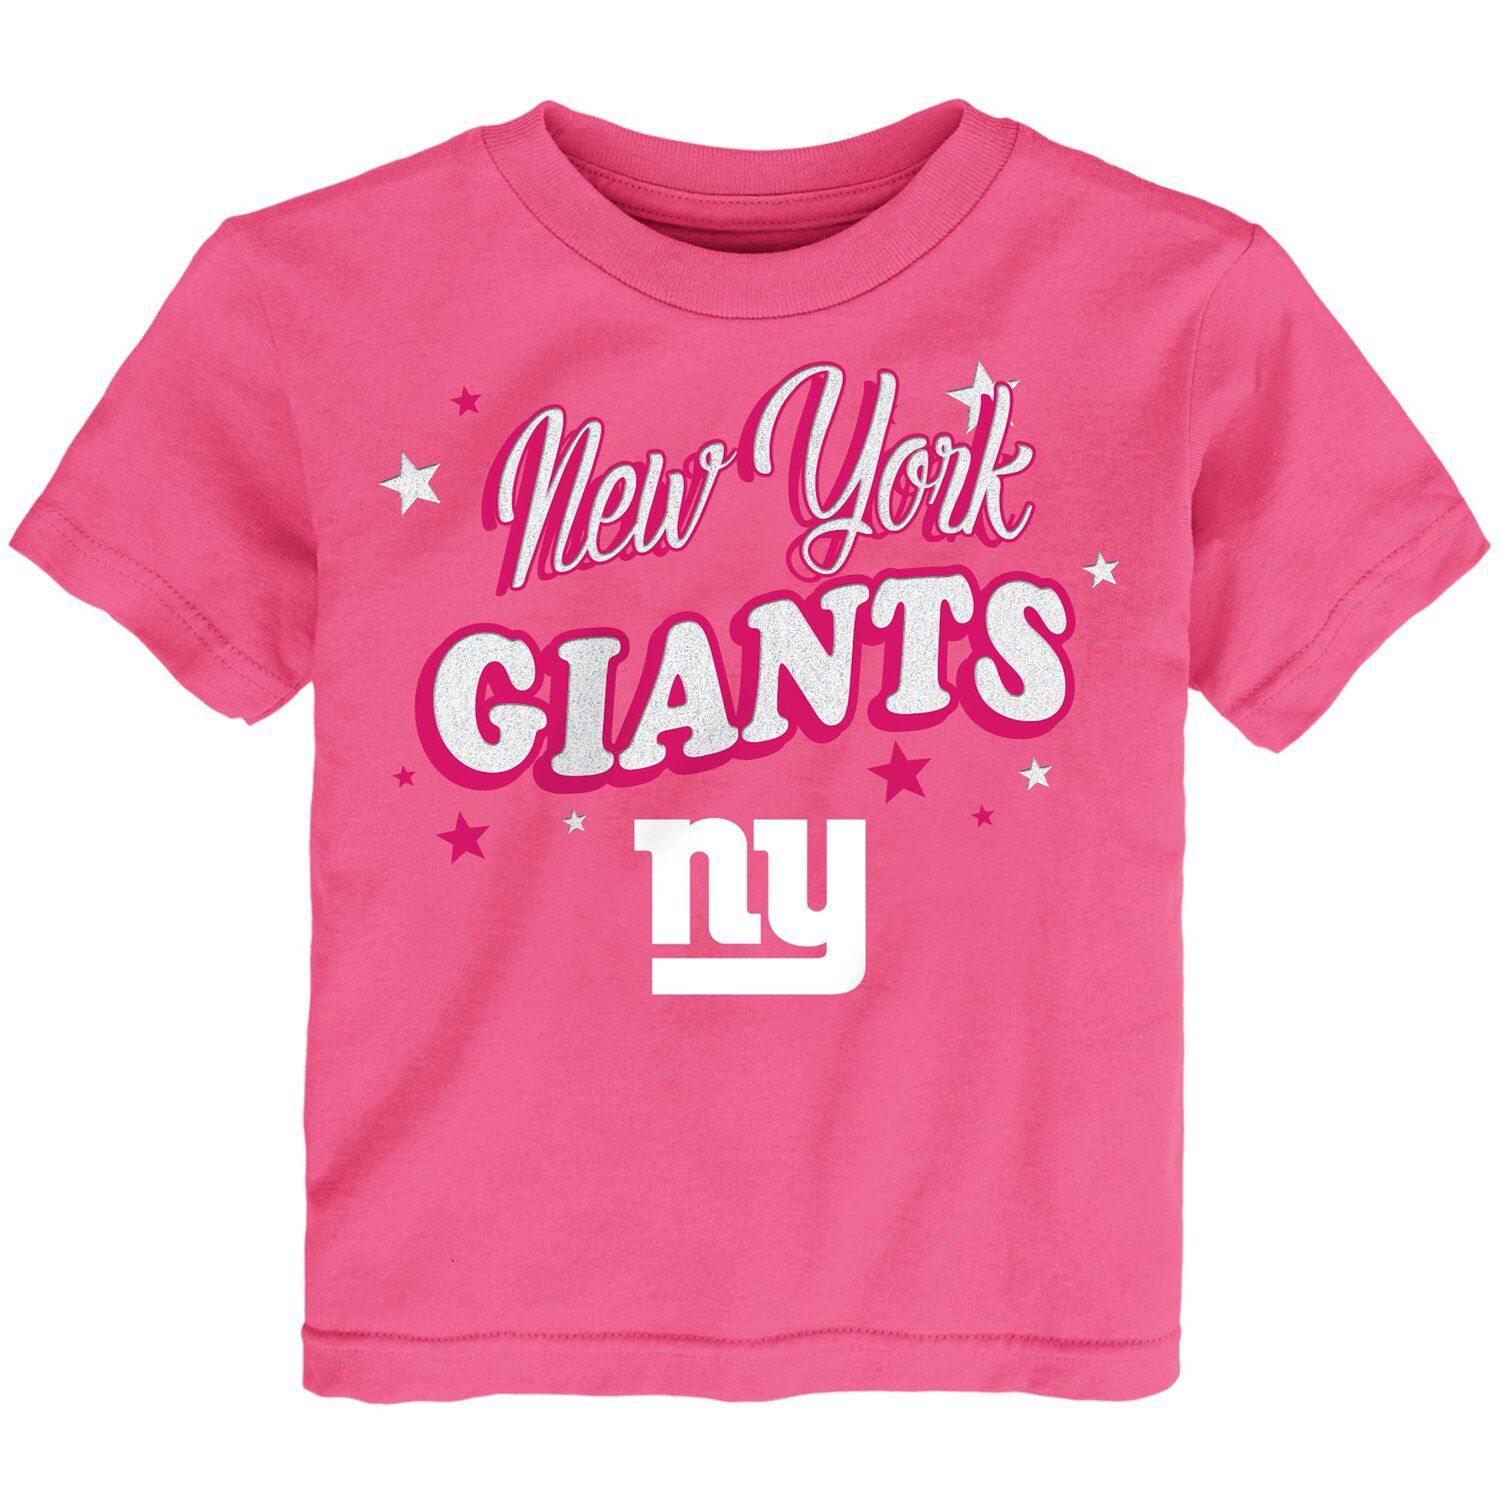 ny giants girls shirt